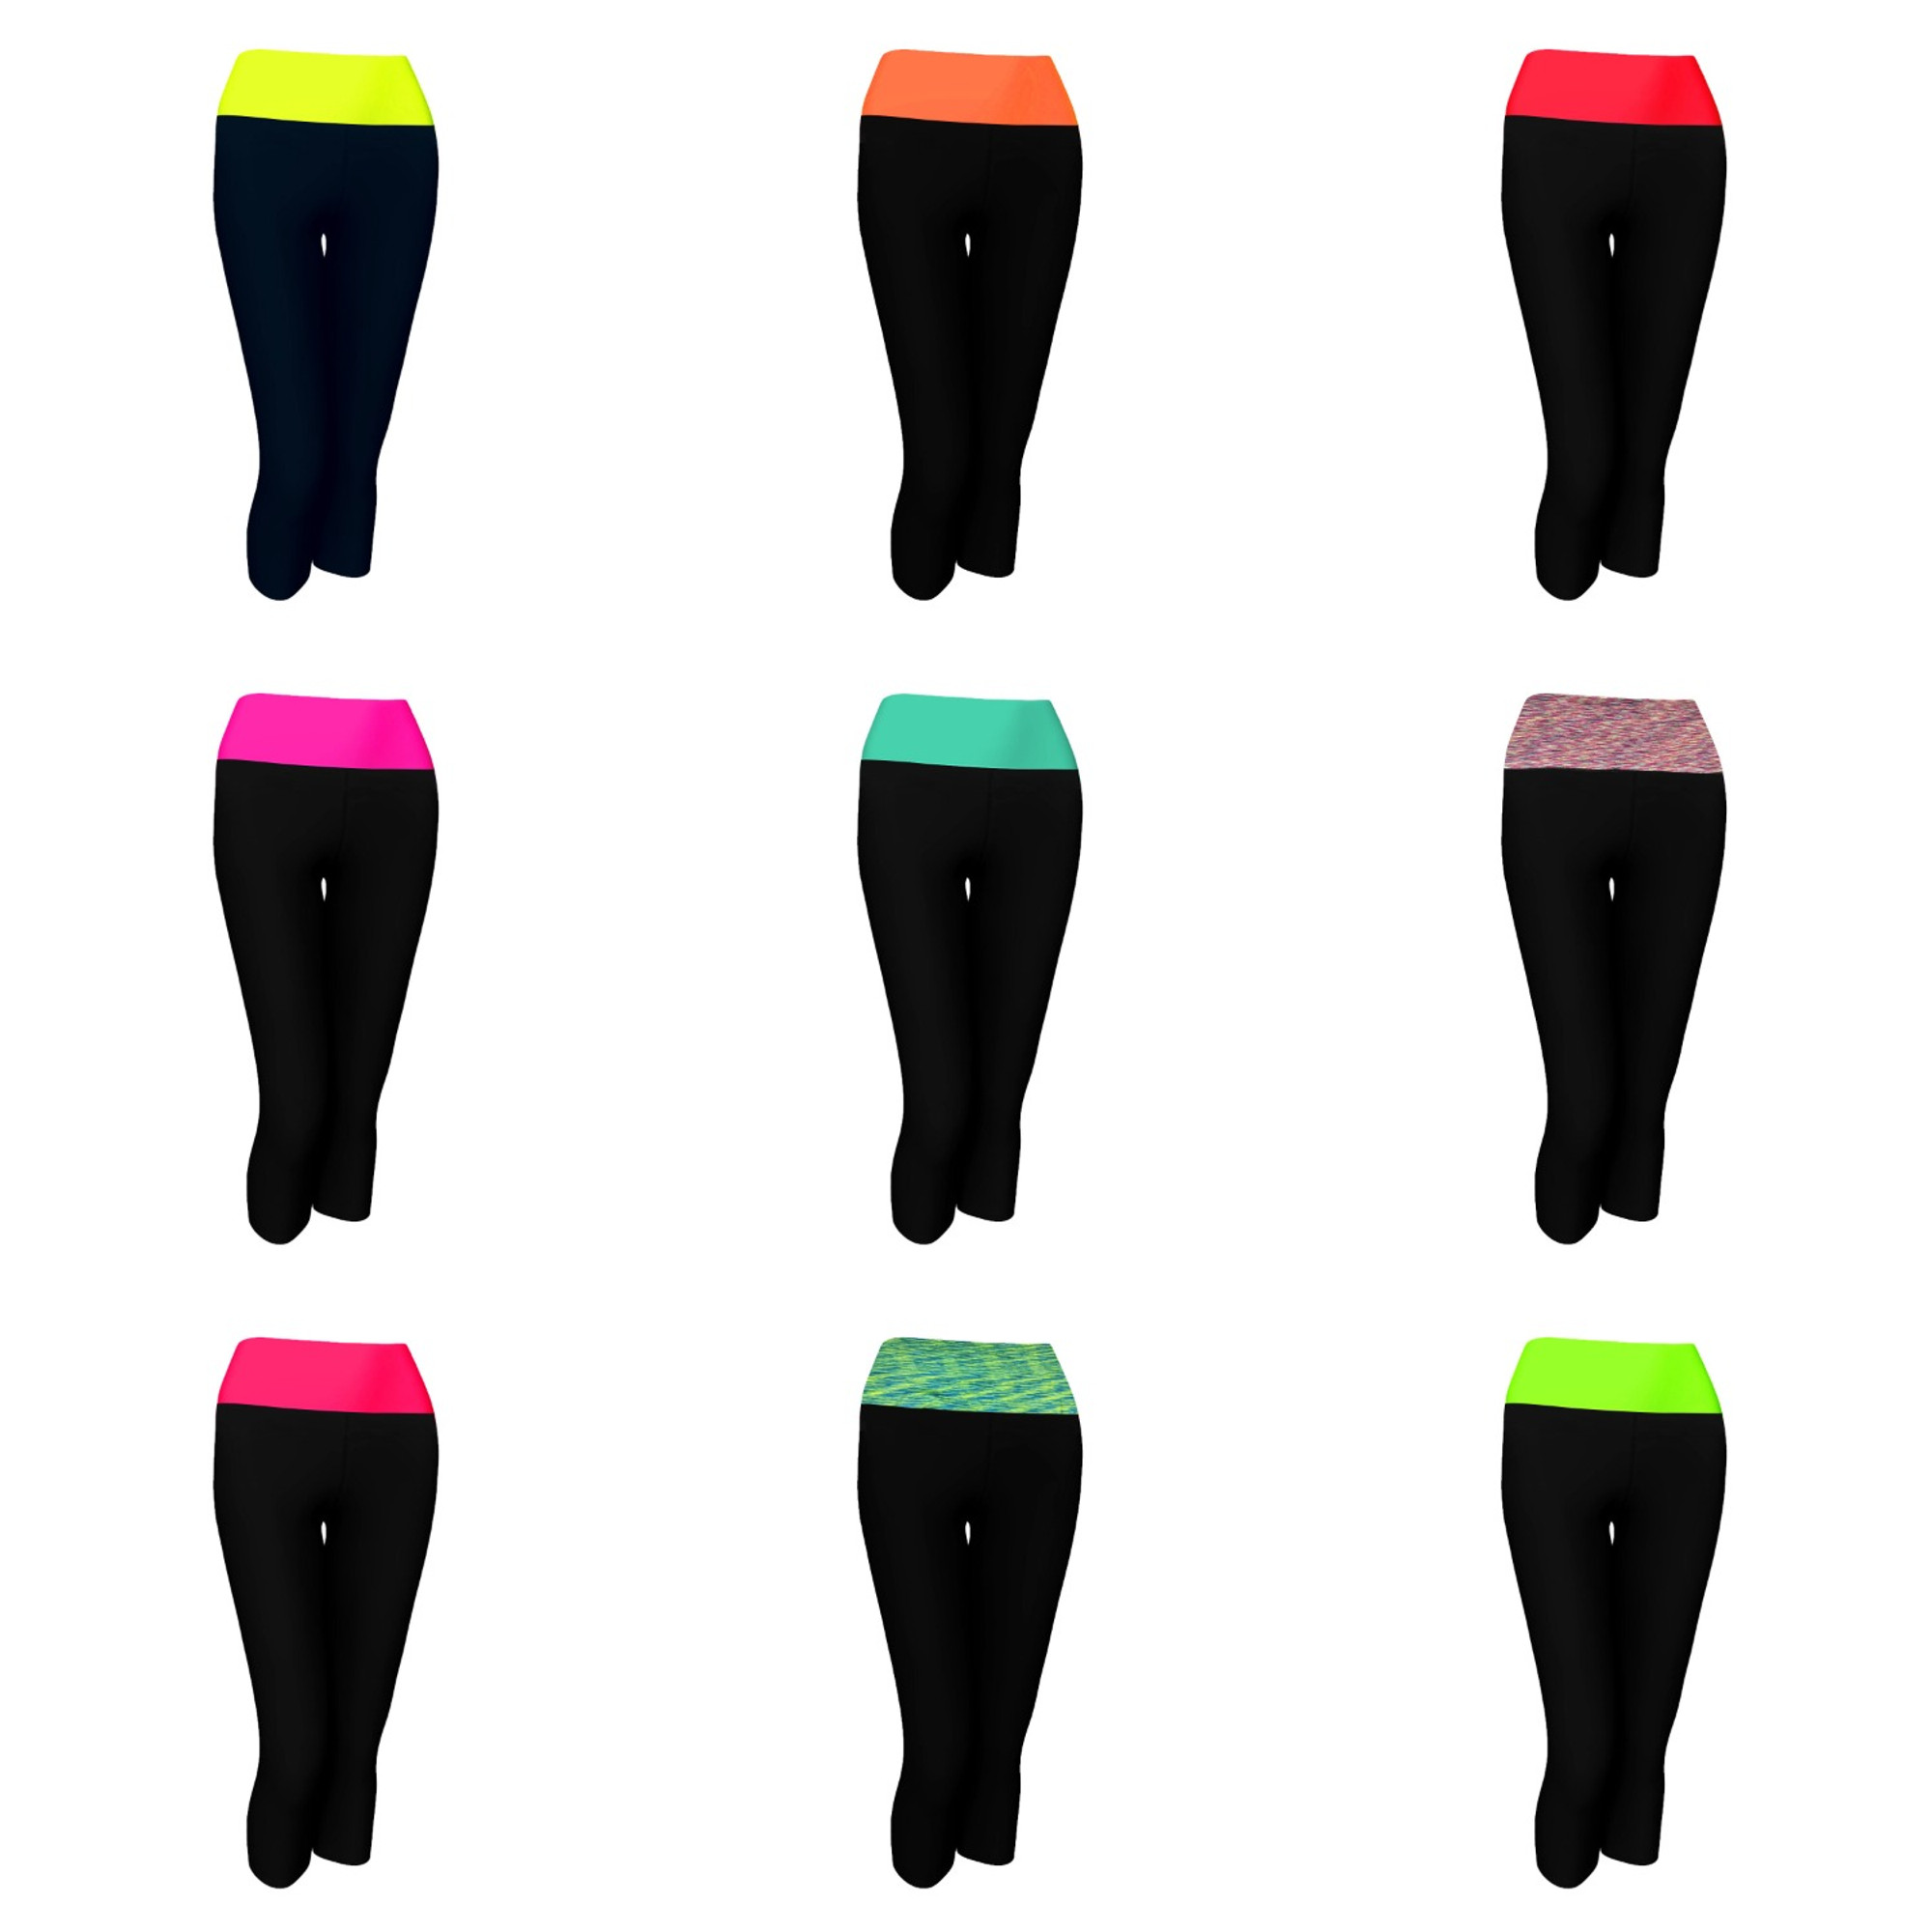 Alta Women's Two Tone Foldover Yoga Capri Cropped Workout Leggings,  Black/Neon Pink, S/M 